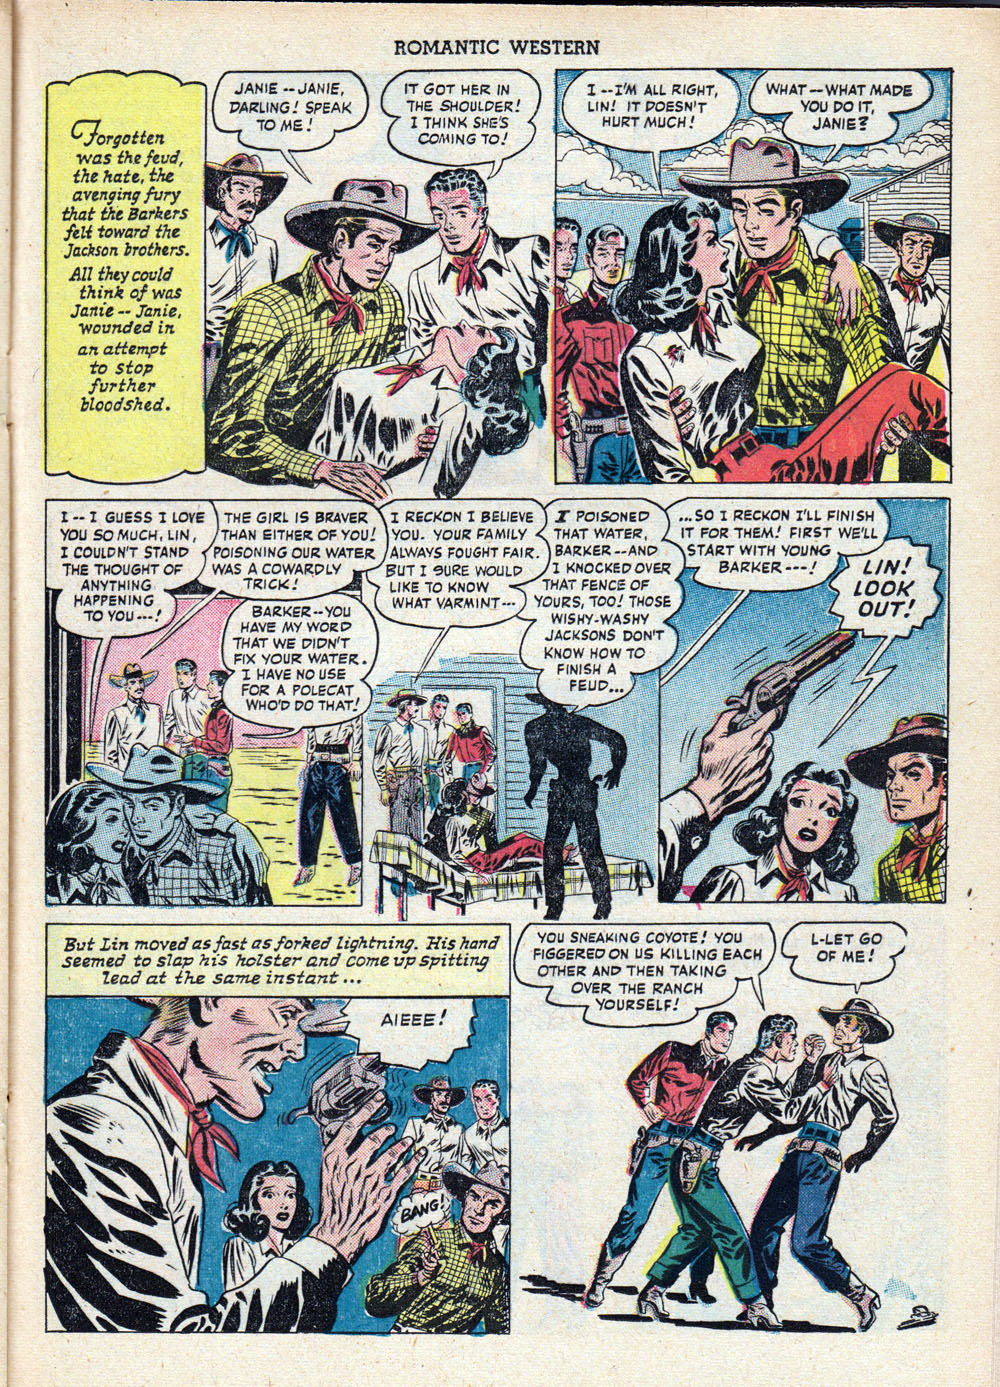 Read online Romantic Western comic -  Issue #1 - 21